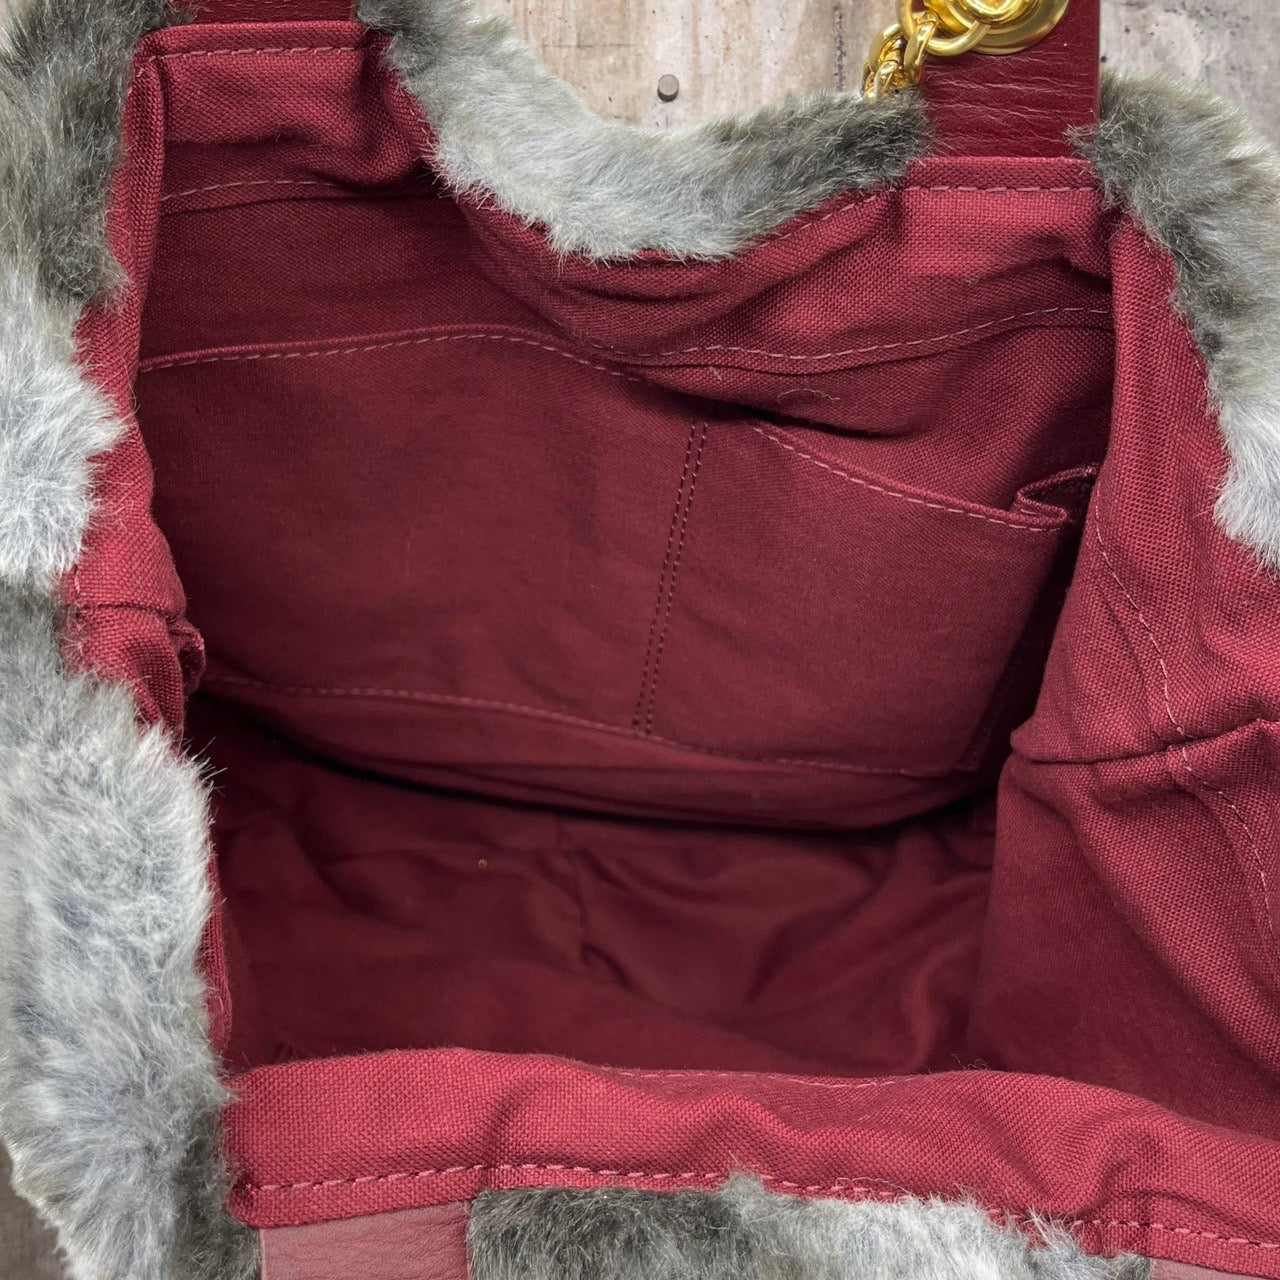 Vivienne Westwood(ヴィヴィアンウエストウッド) orb charm eco fur  bag/オーブチャームエコファーバッグ/トートバッグ グレー